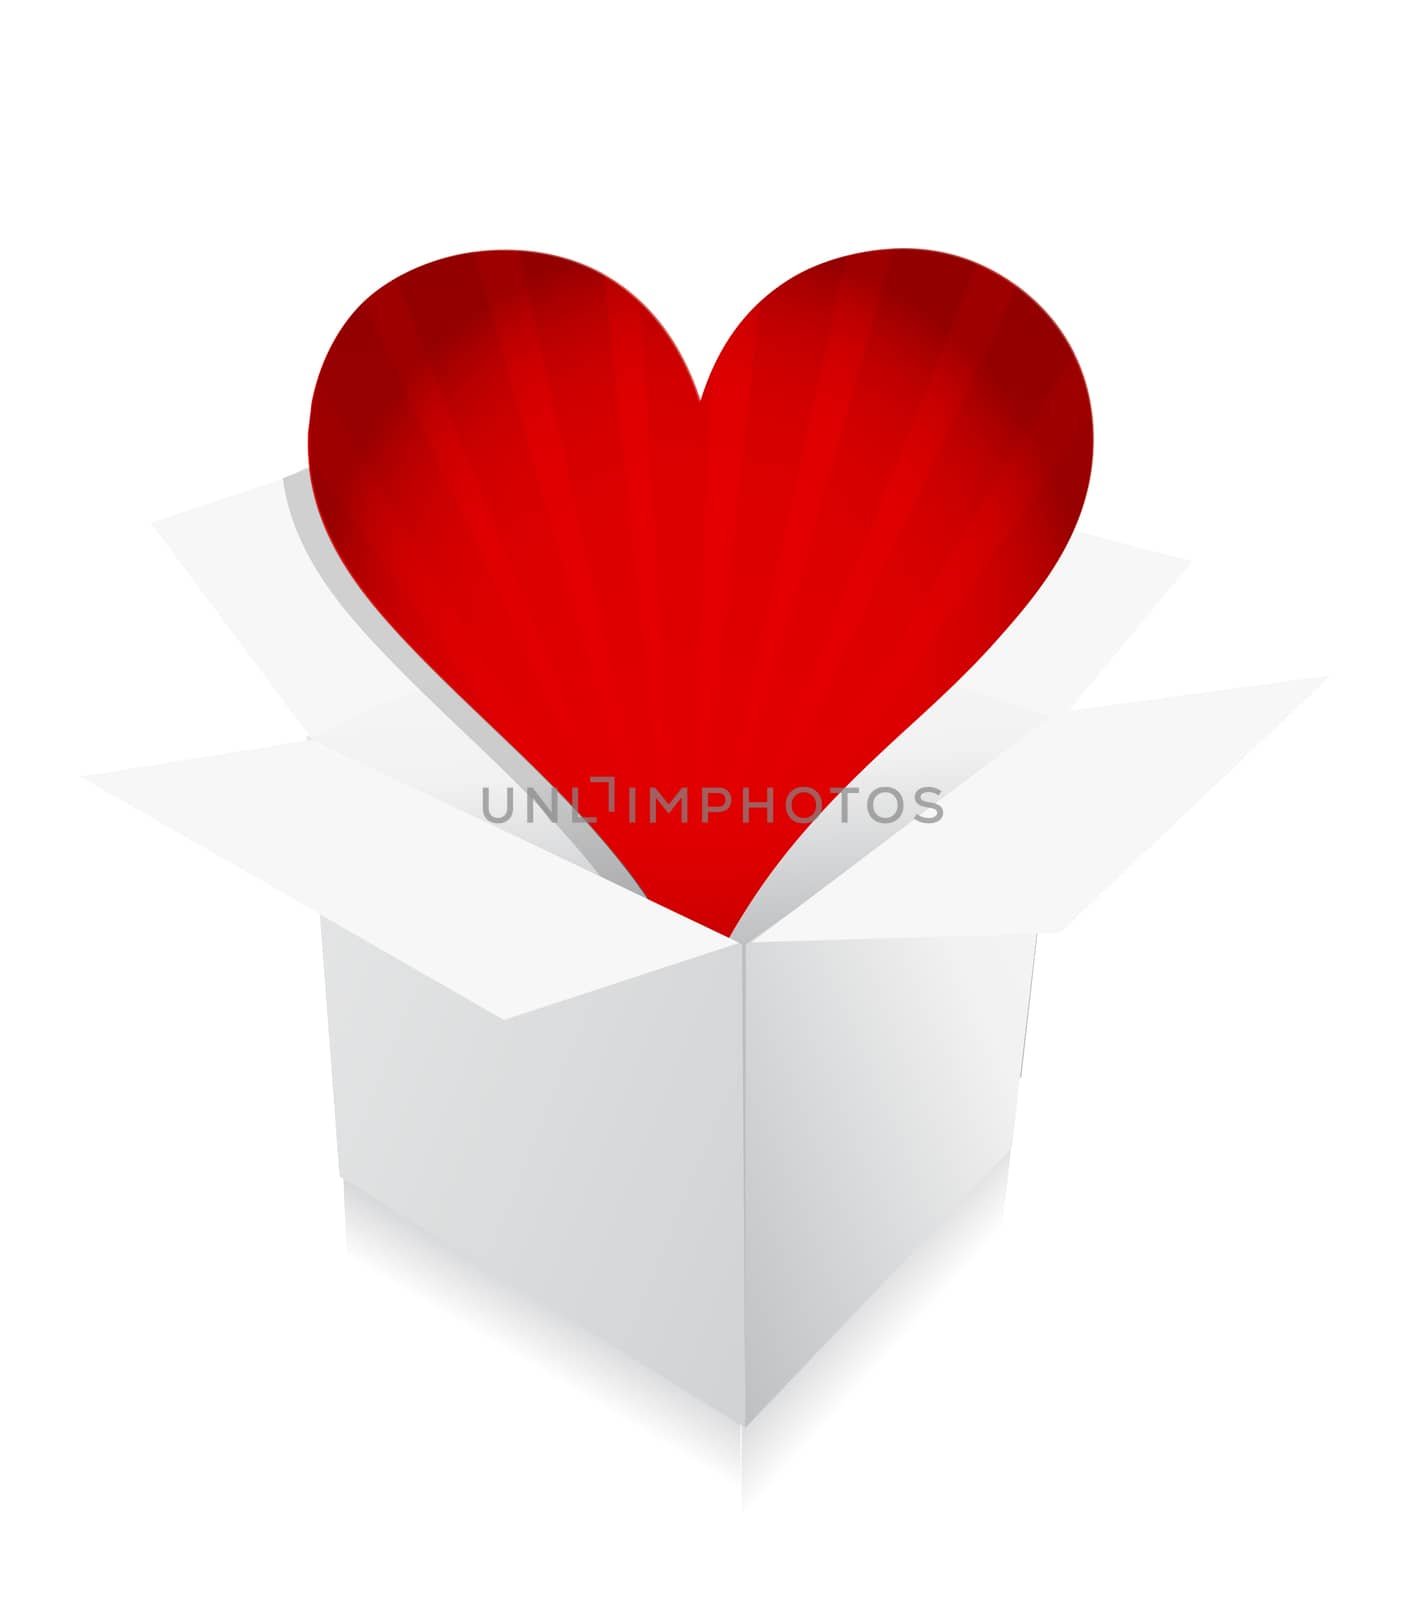 love box heart concept illustration design over white by alexmillos